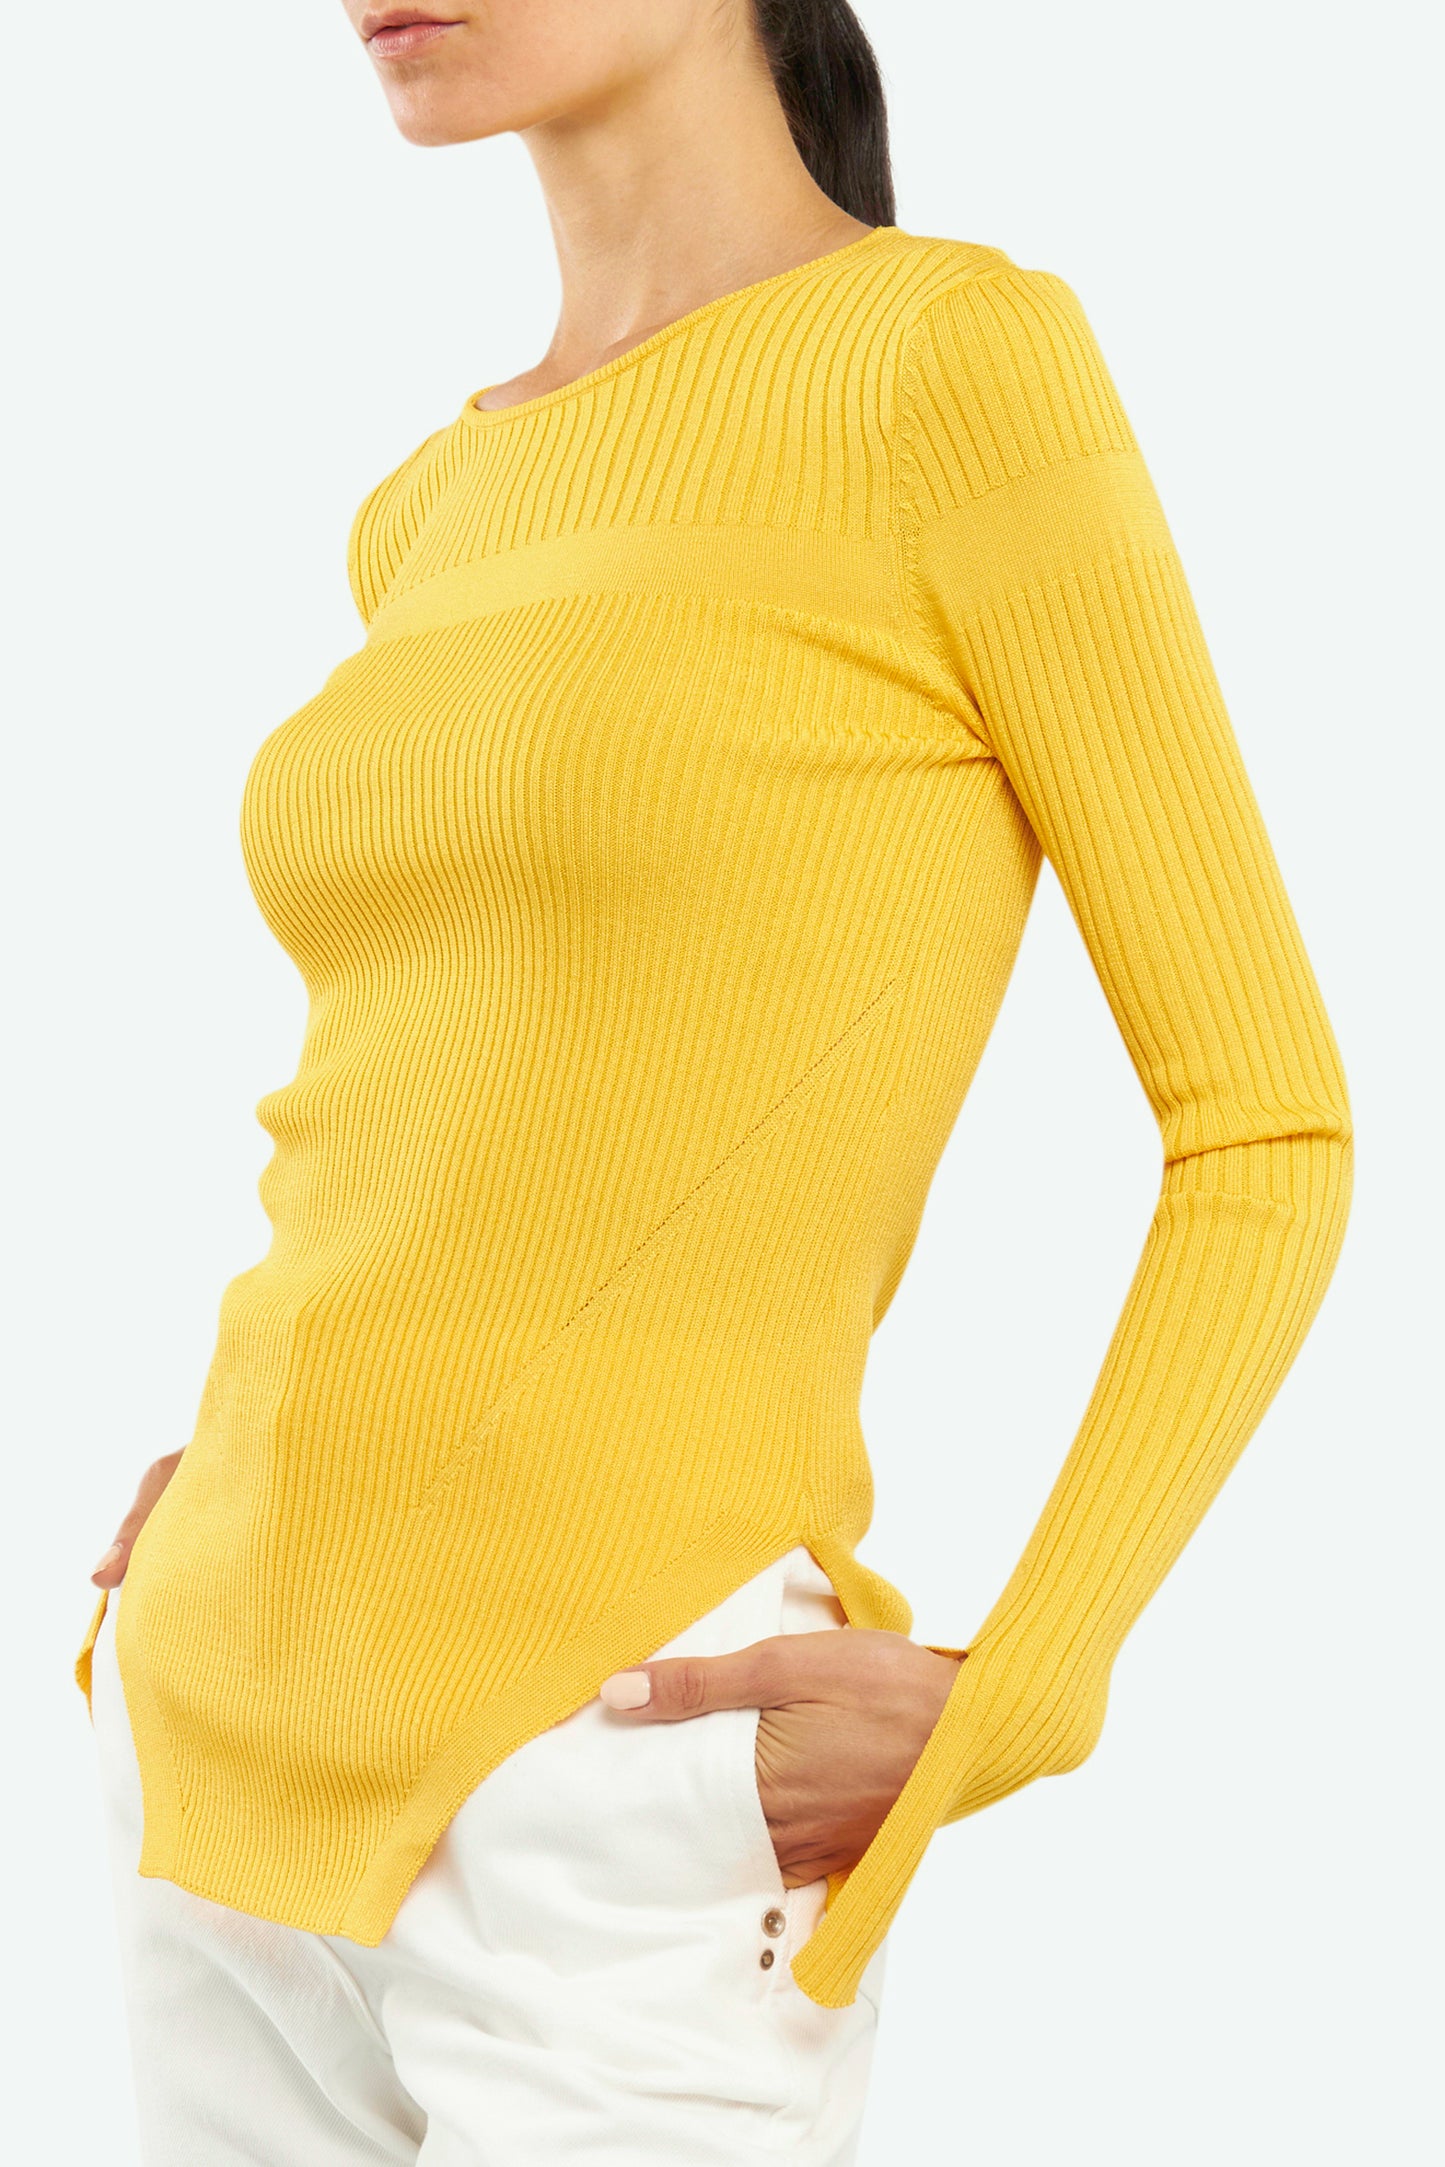 Patrizia Pepe Yellow Ribbed Sweater